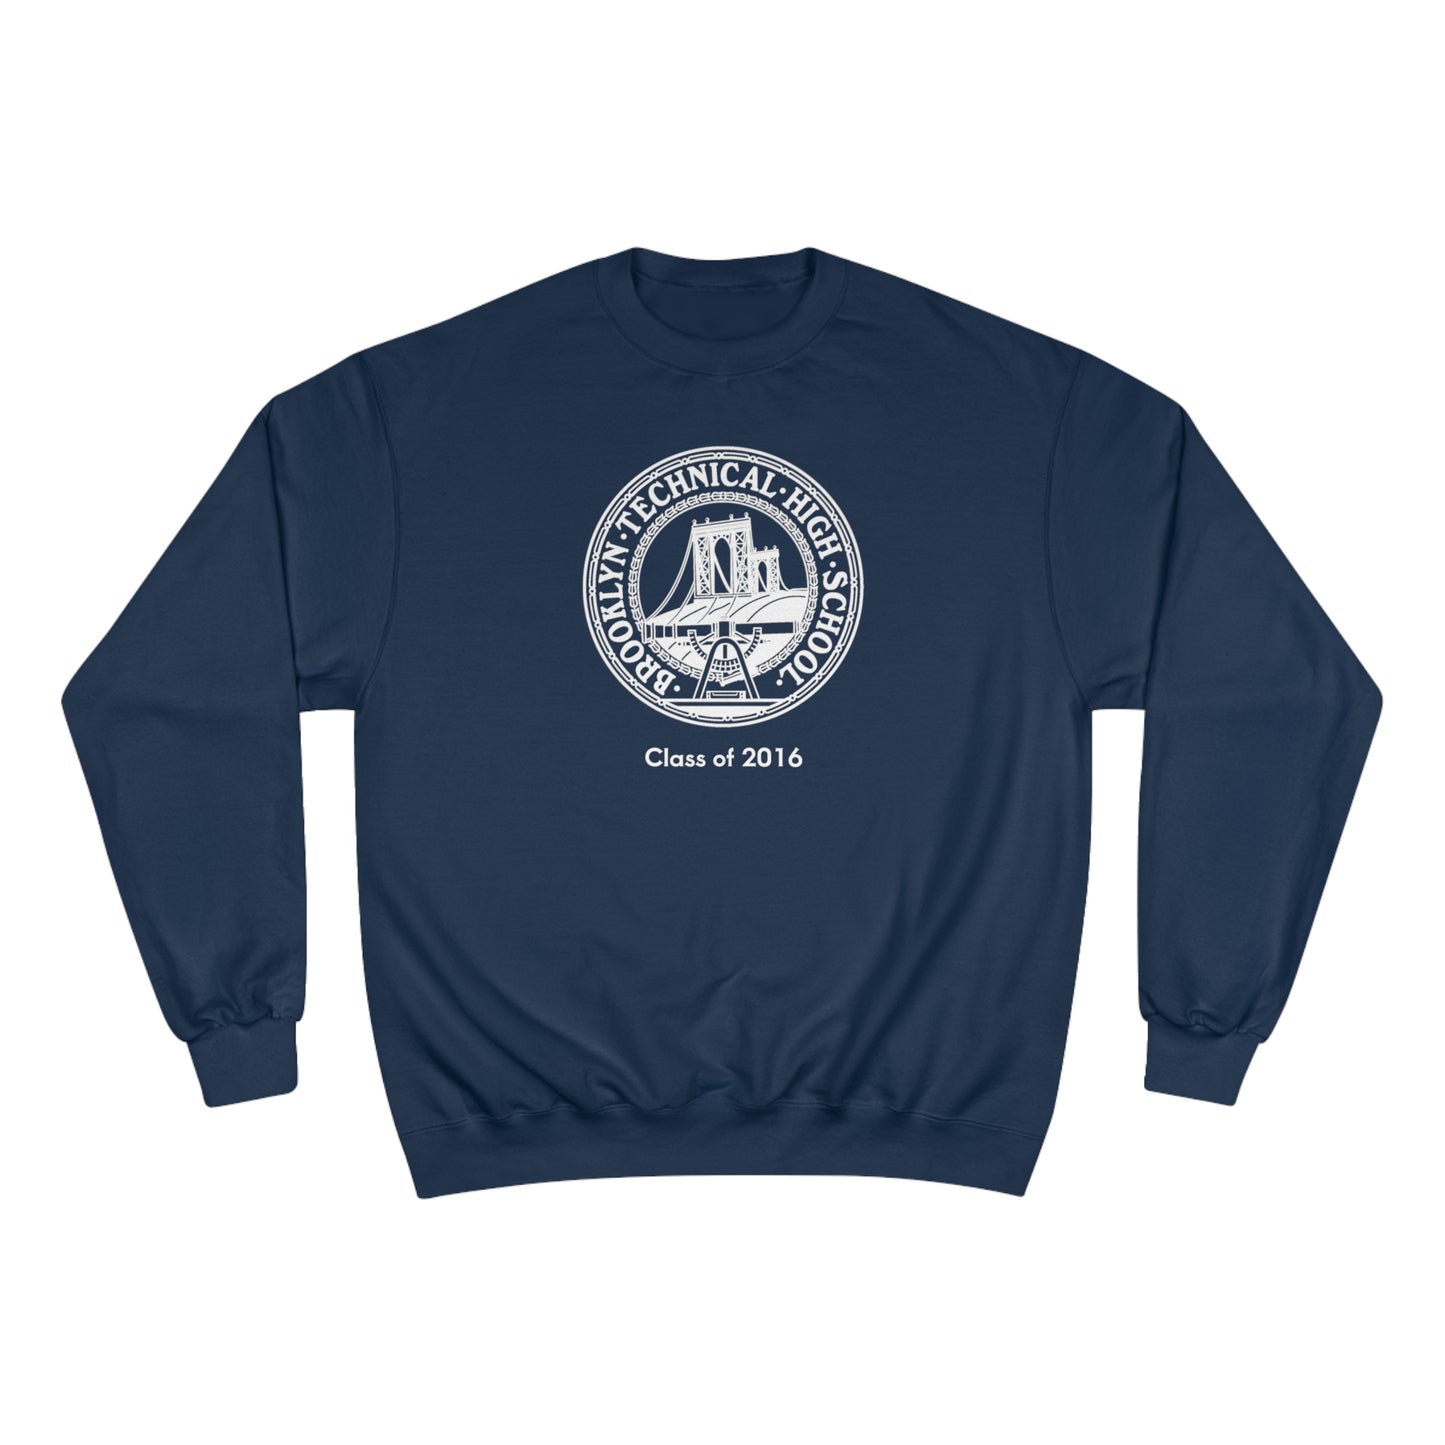 Classic Tech Seal - Champion Crewneck Sweatshirt - Class Of 2016